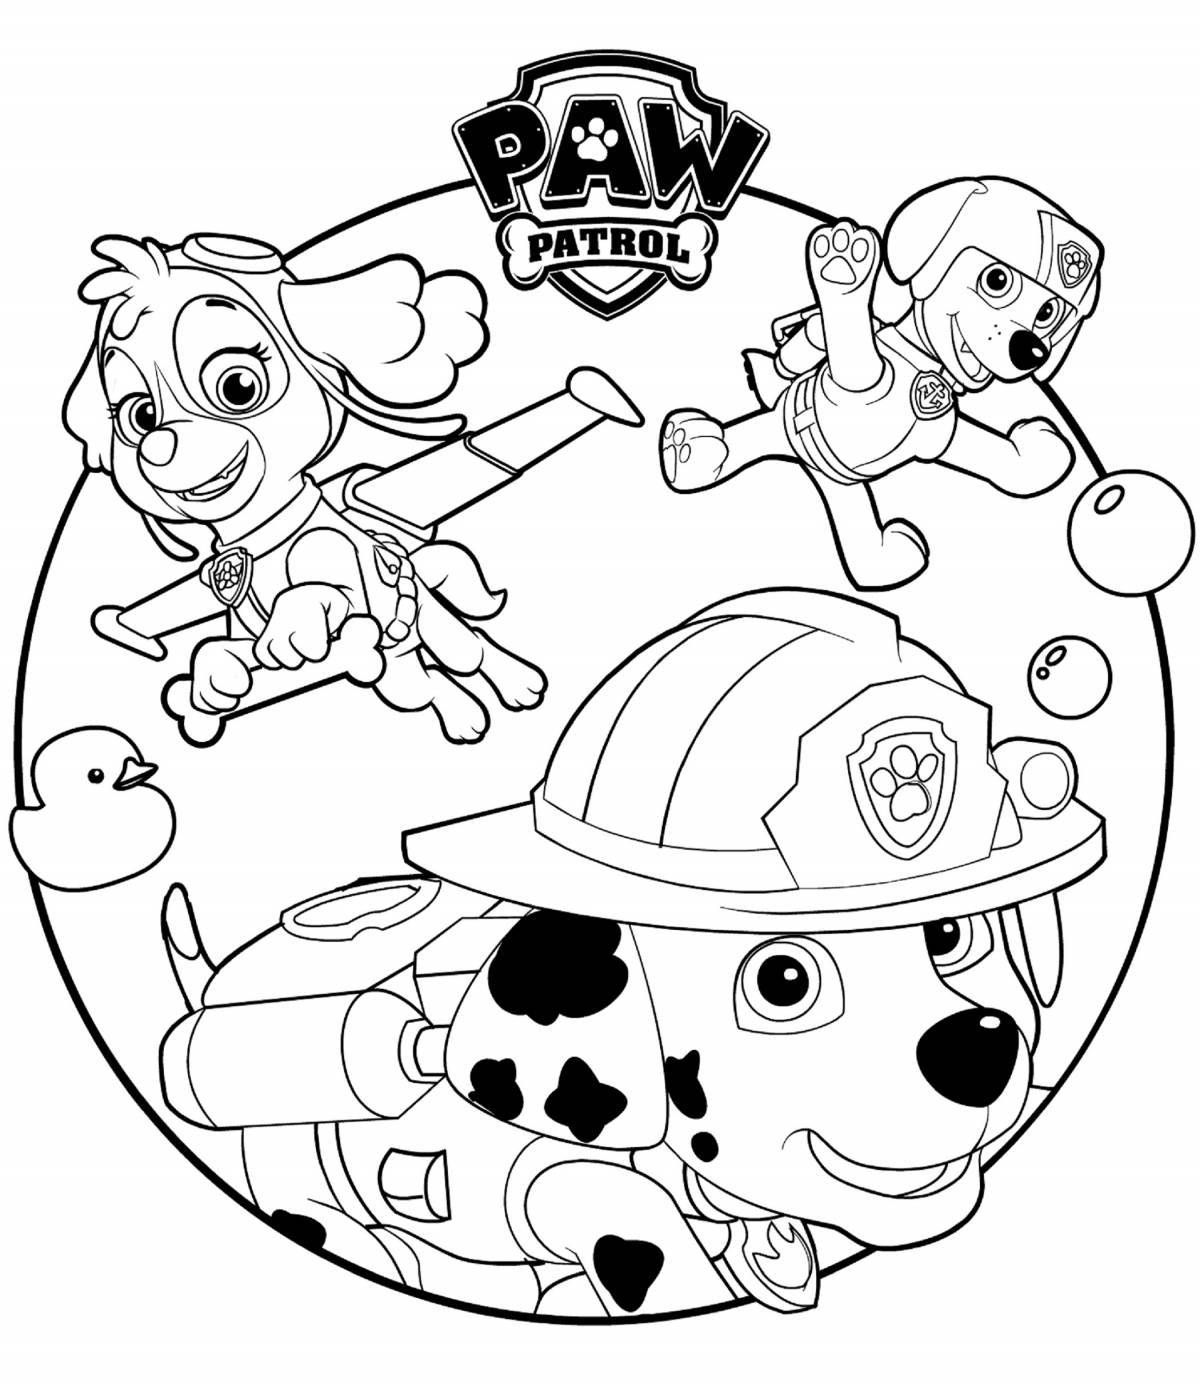 Rocky paw patrol stylish coloring book